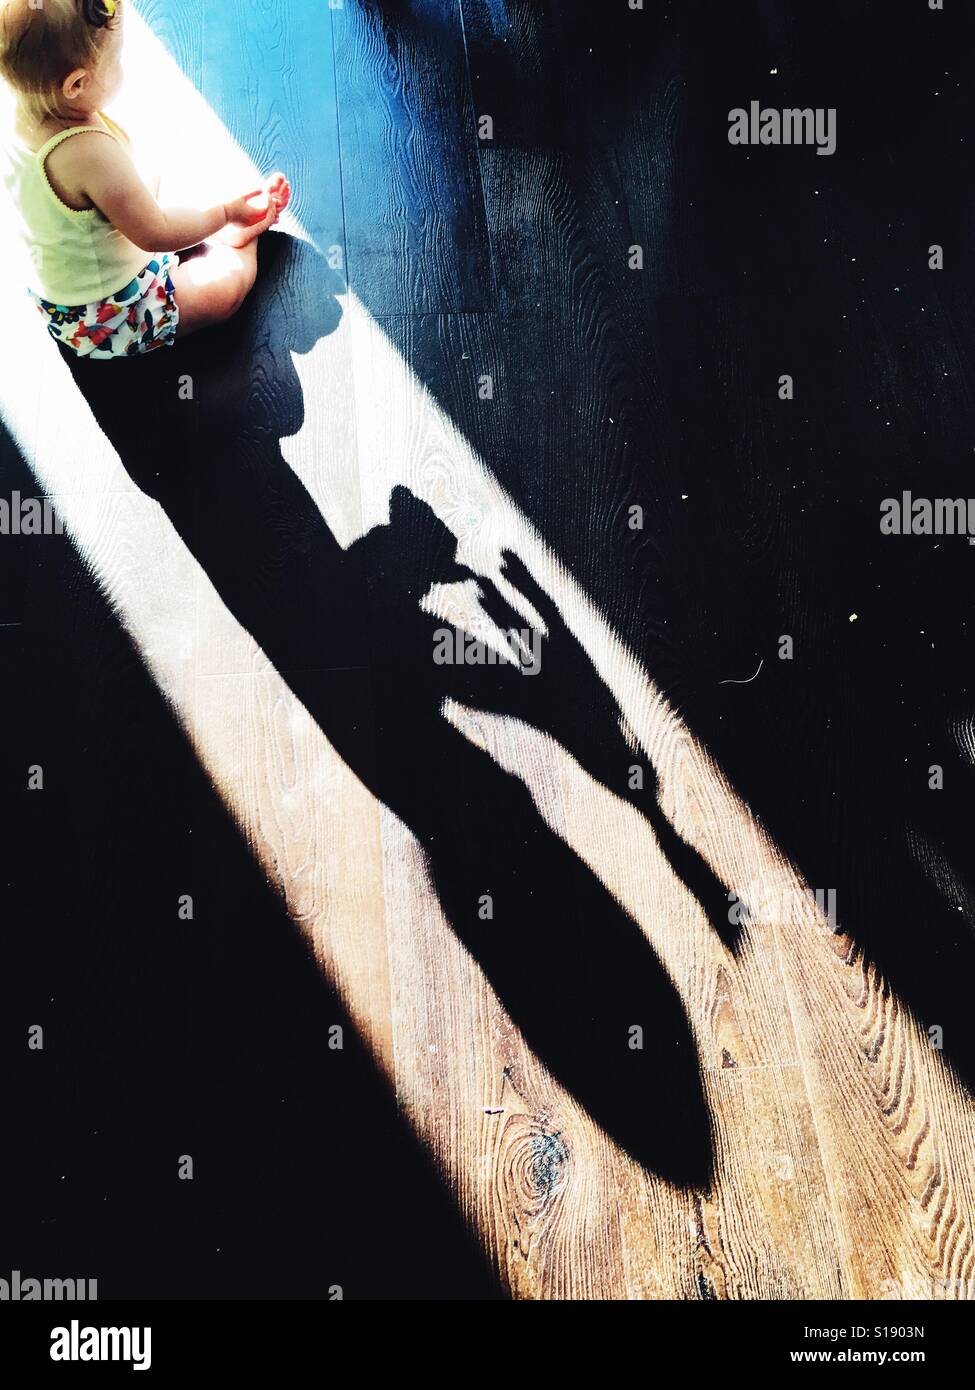 Shadow of girl playing with giraffe Stock Photo